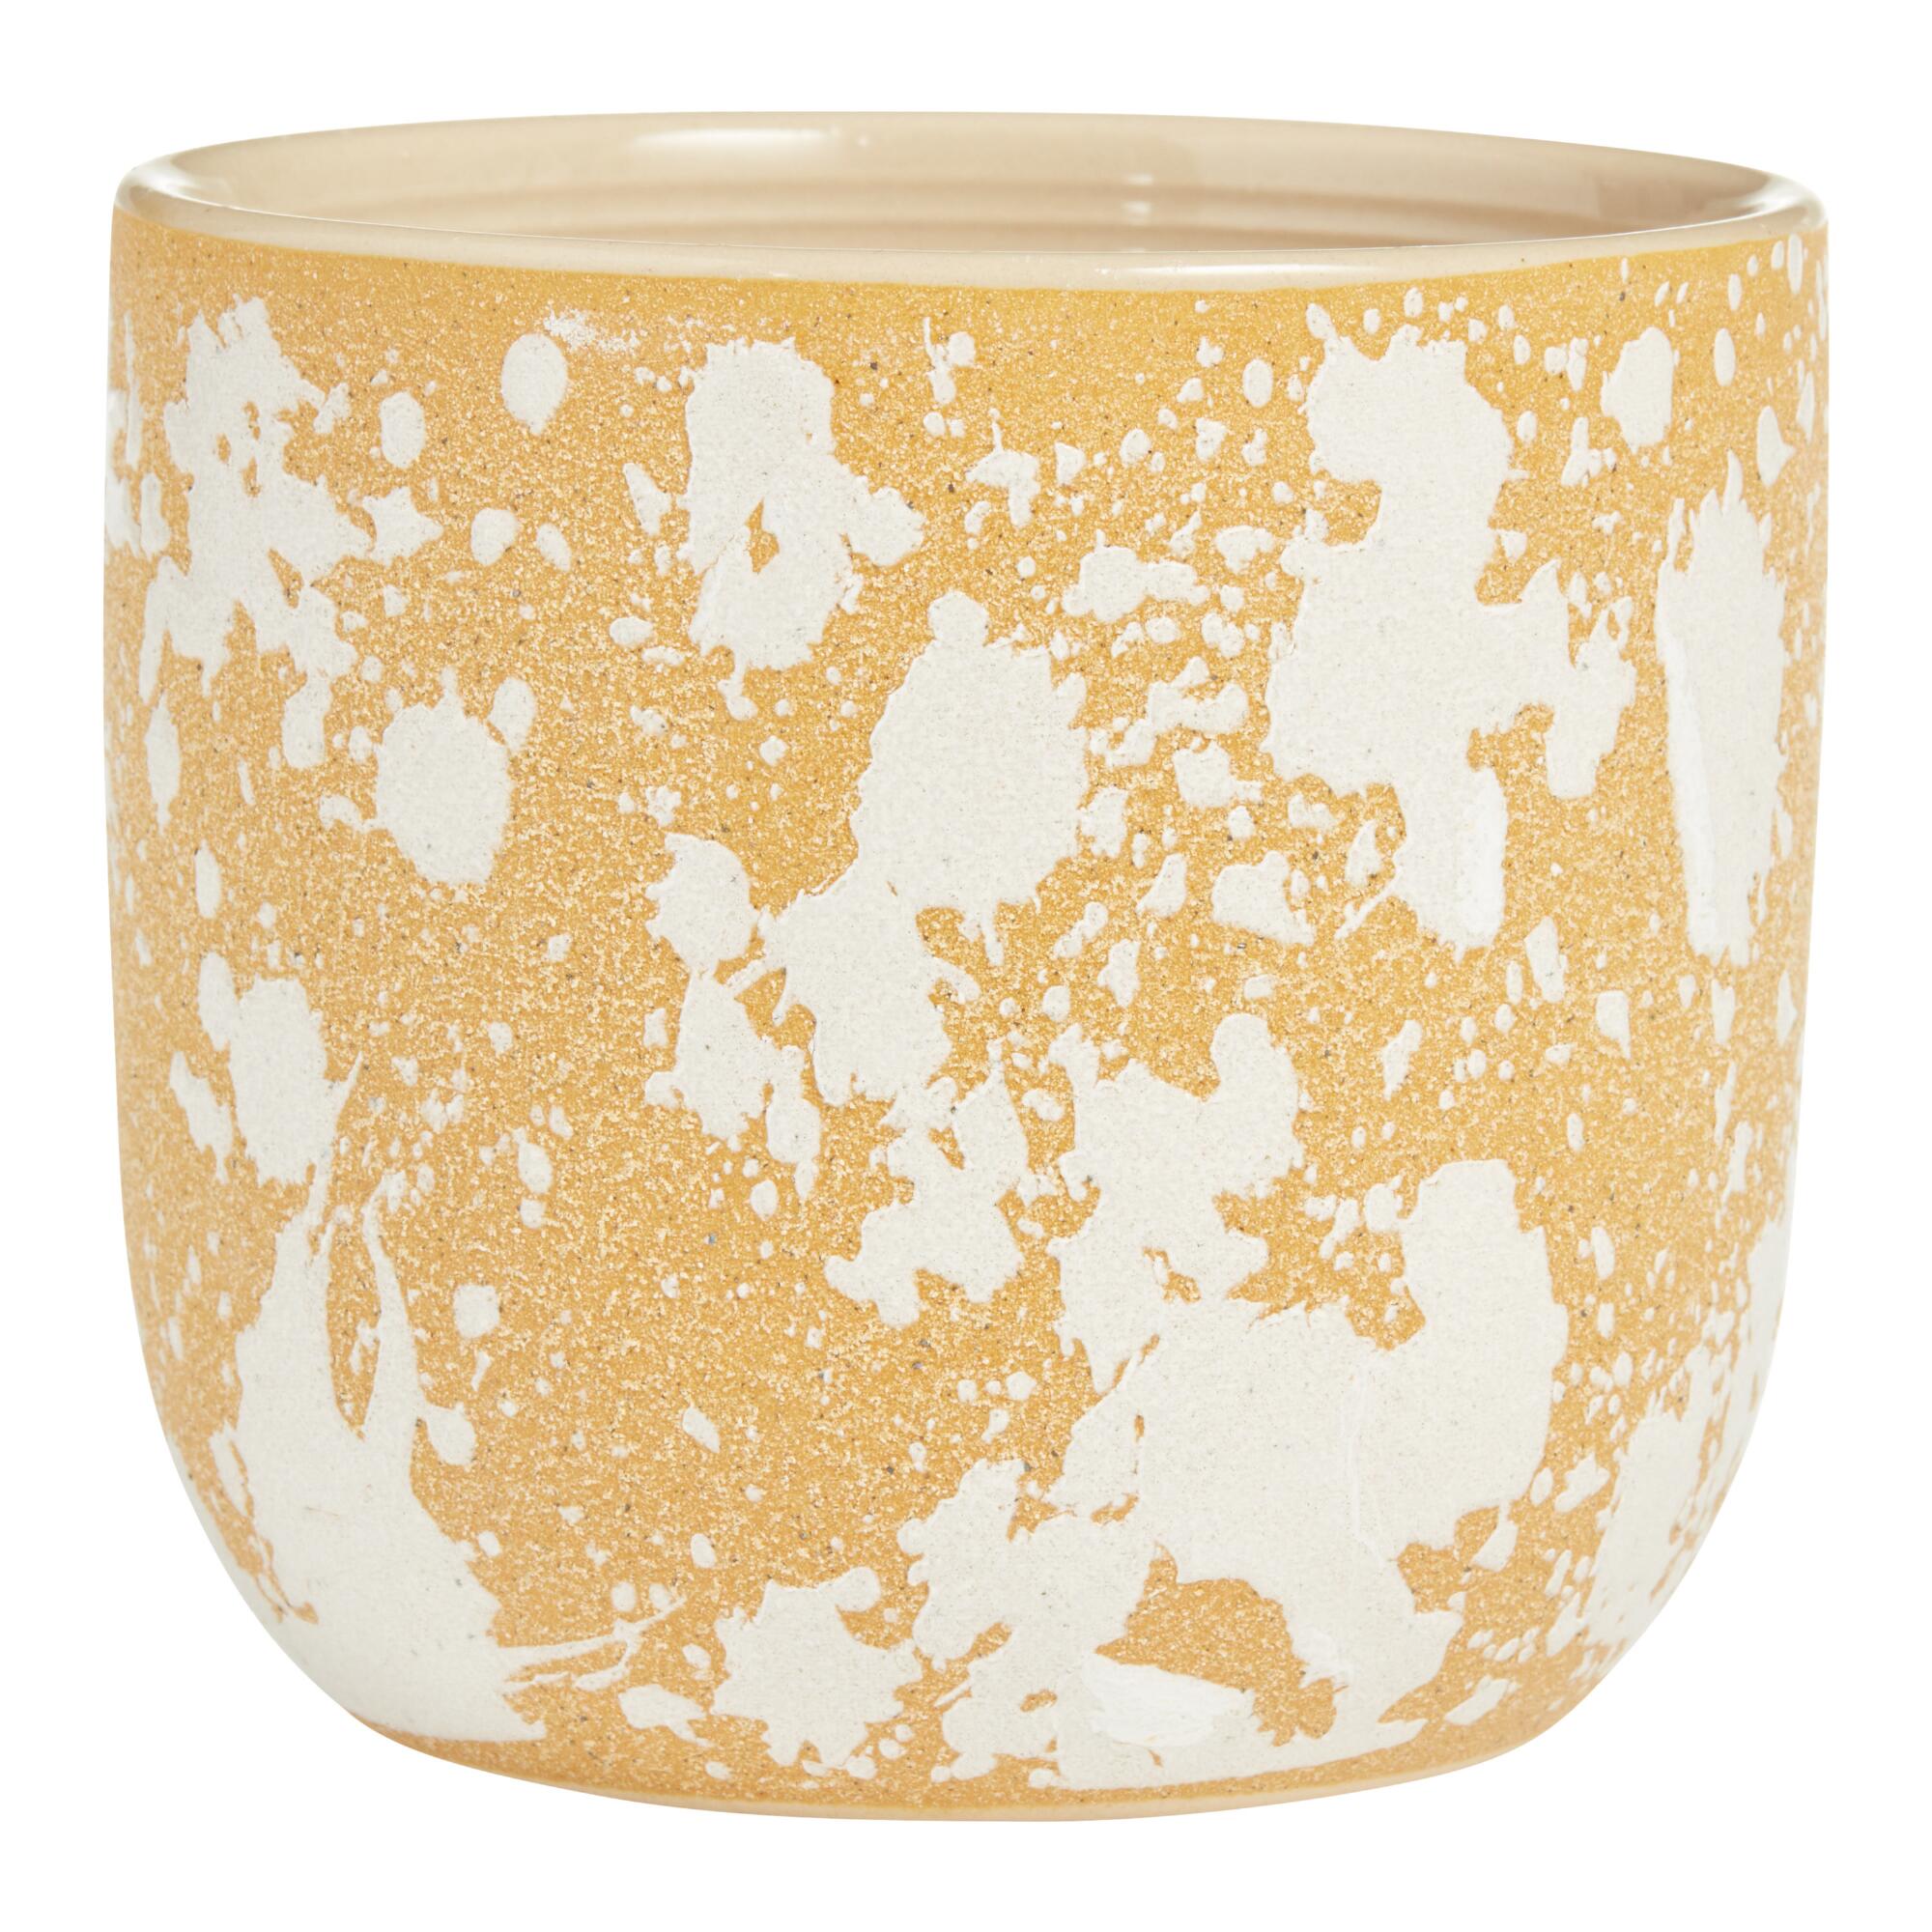 Ochre And White Textured Dappled Ceramic Planter: Yellow/Natural by World Market